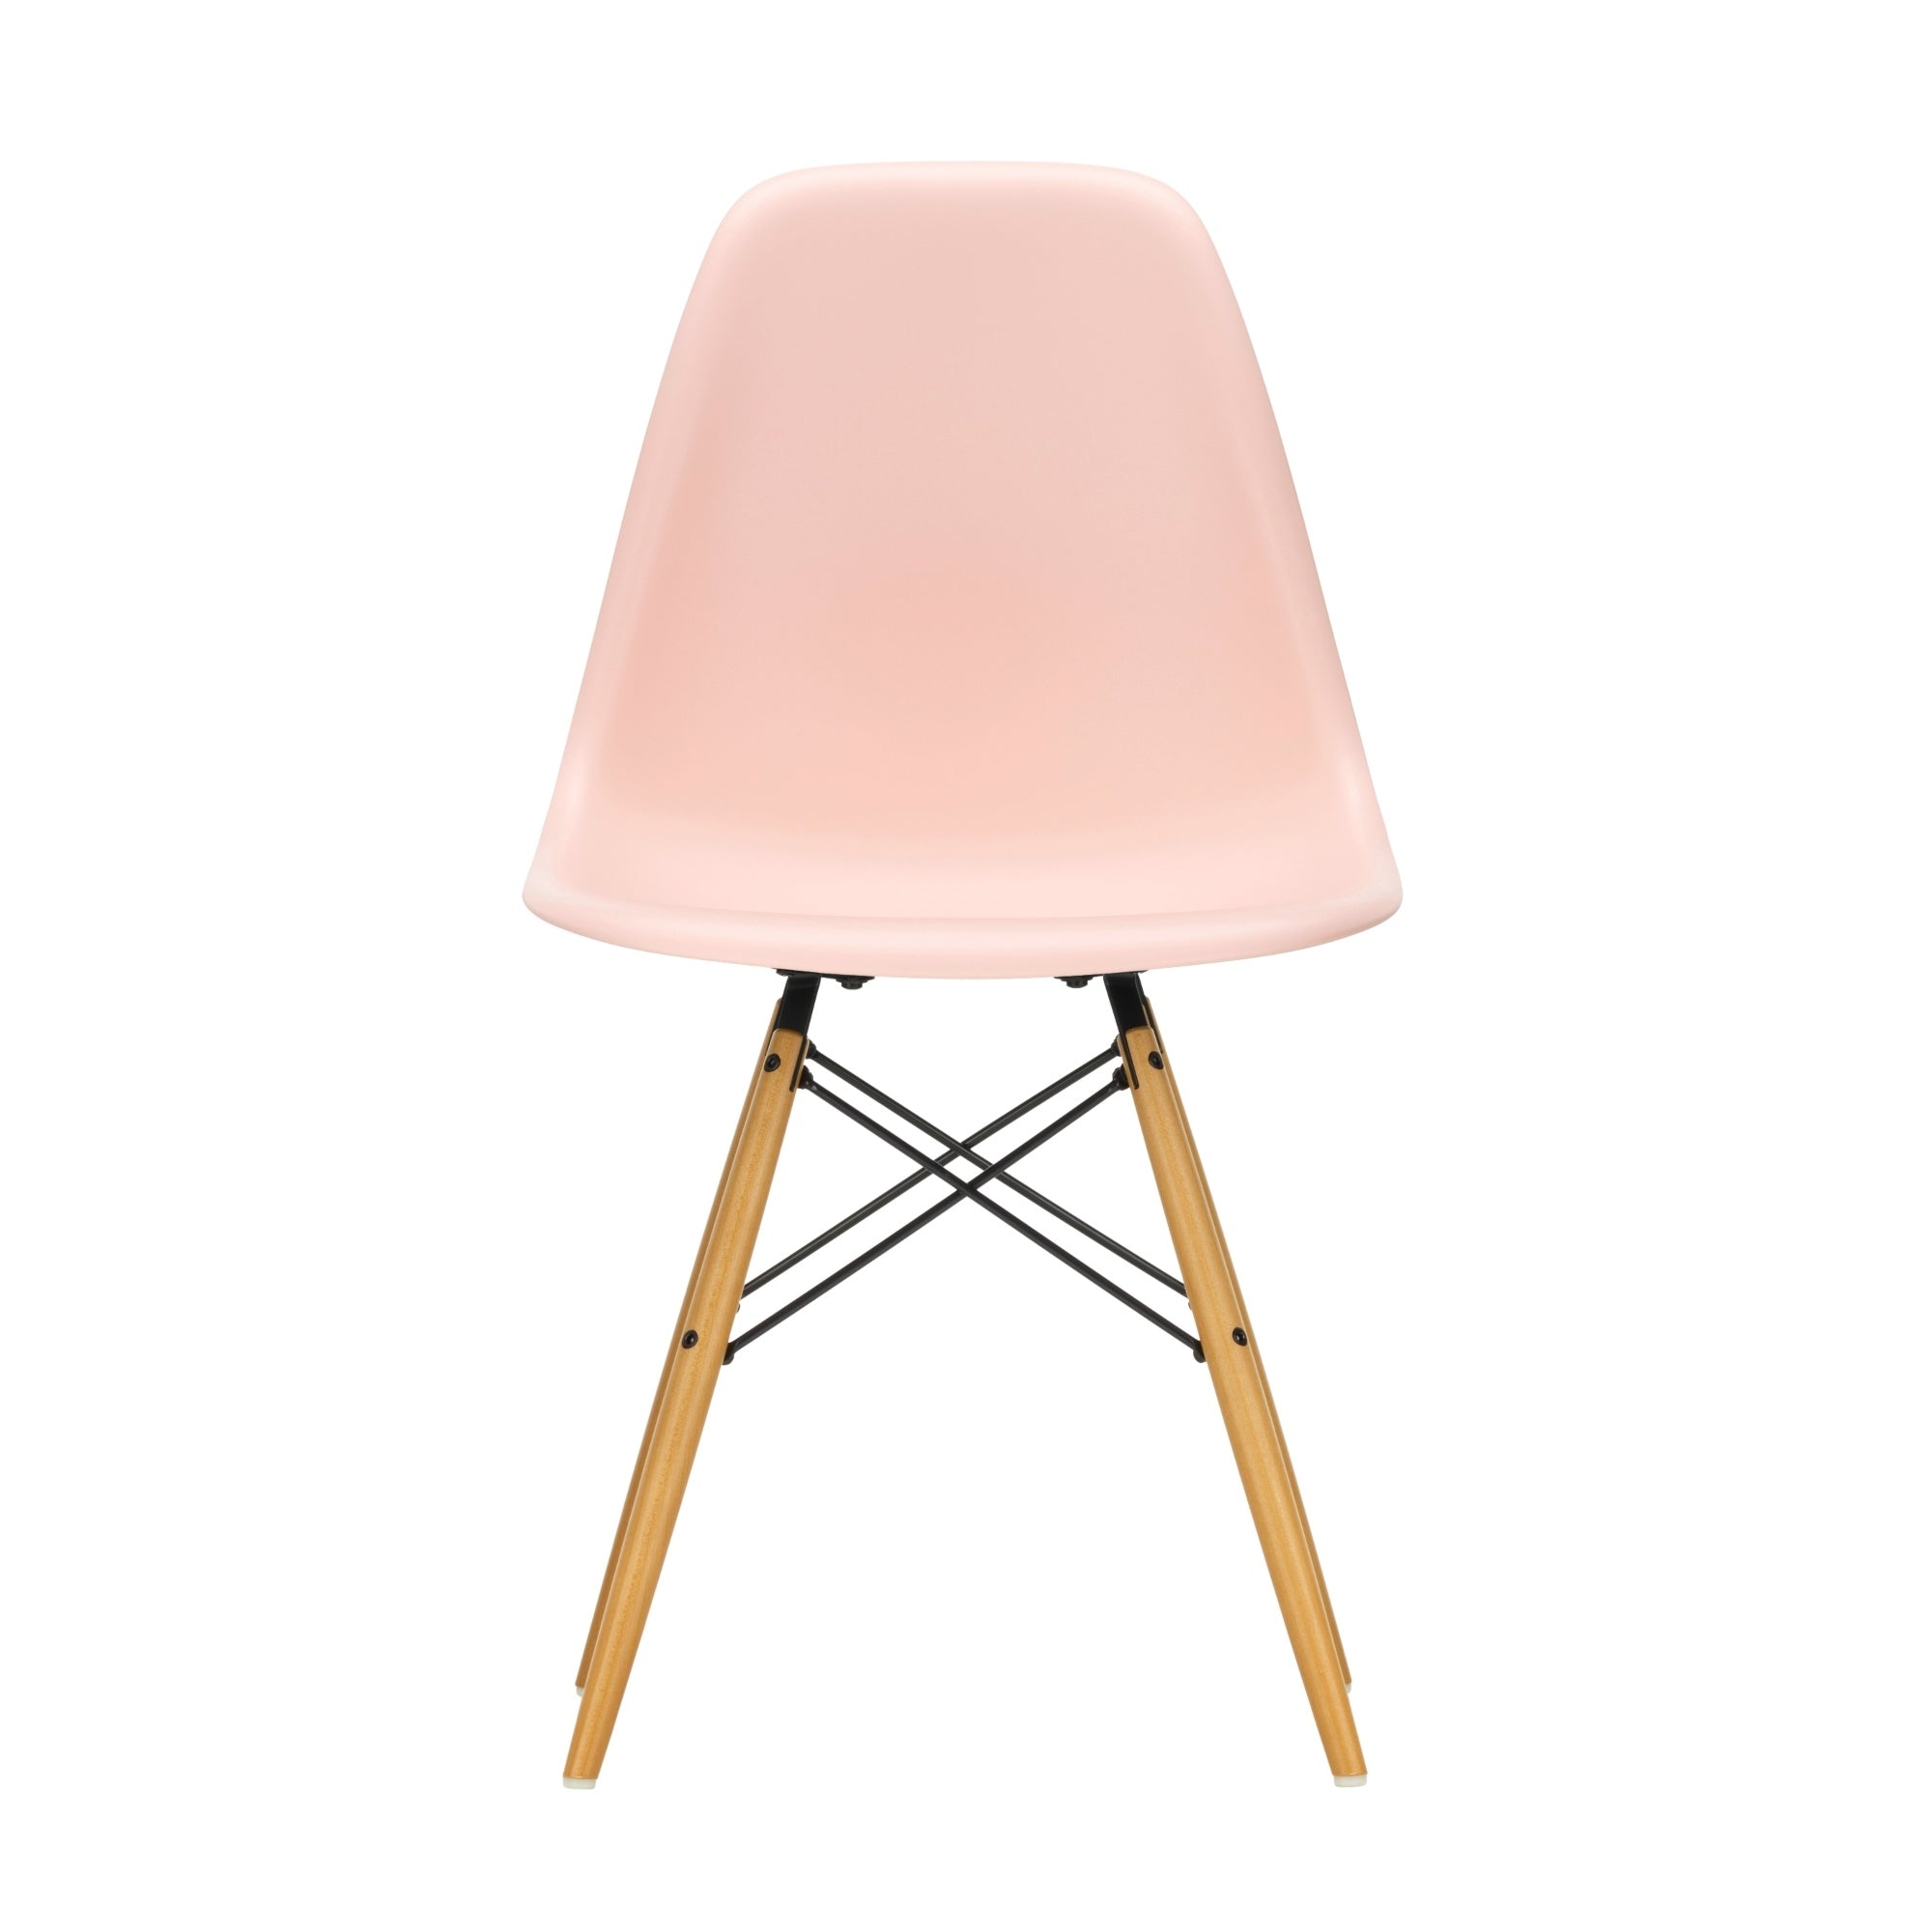 Vitra Eames DSW tuoli roosa/vaahtera - Laatukaluste